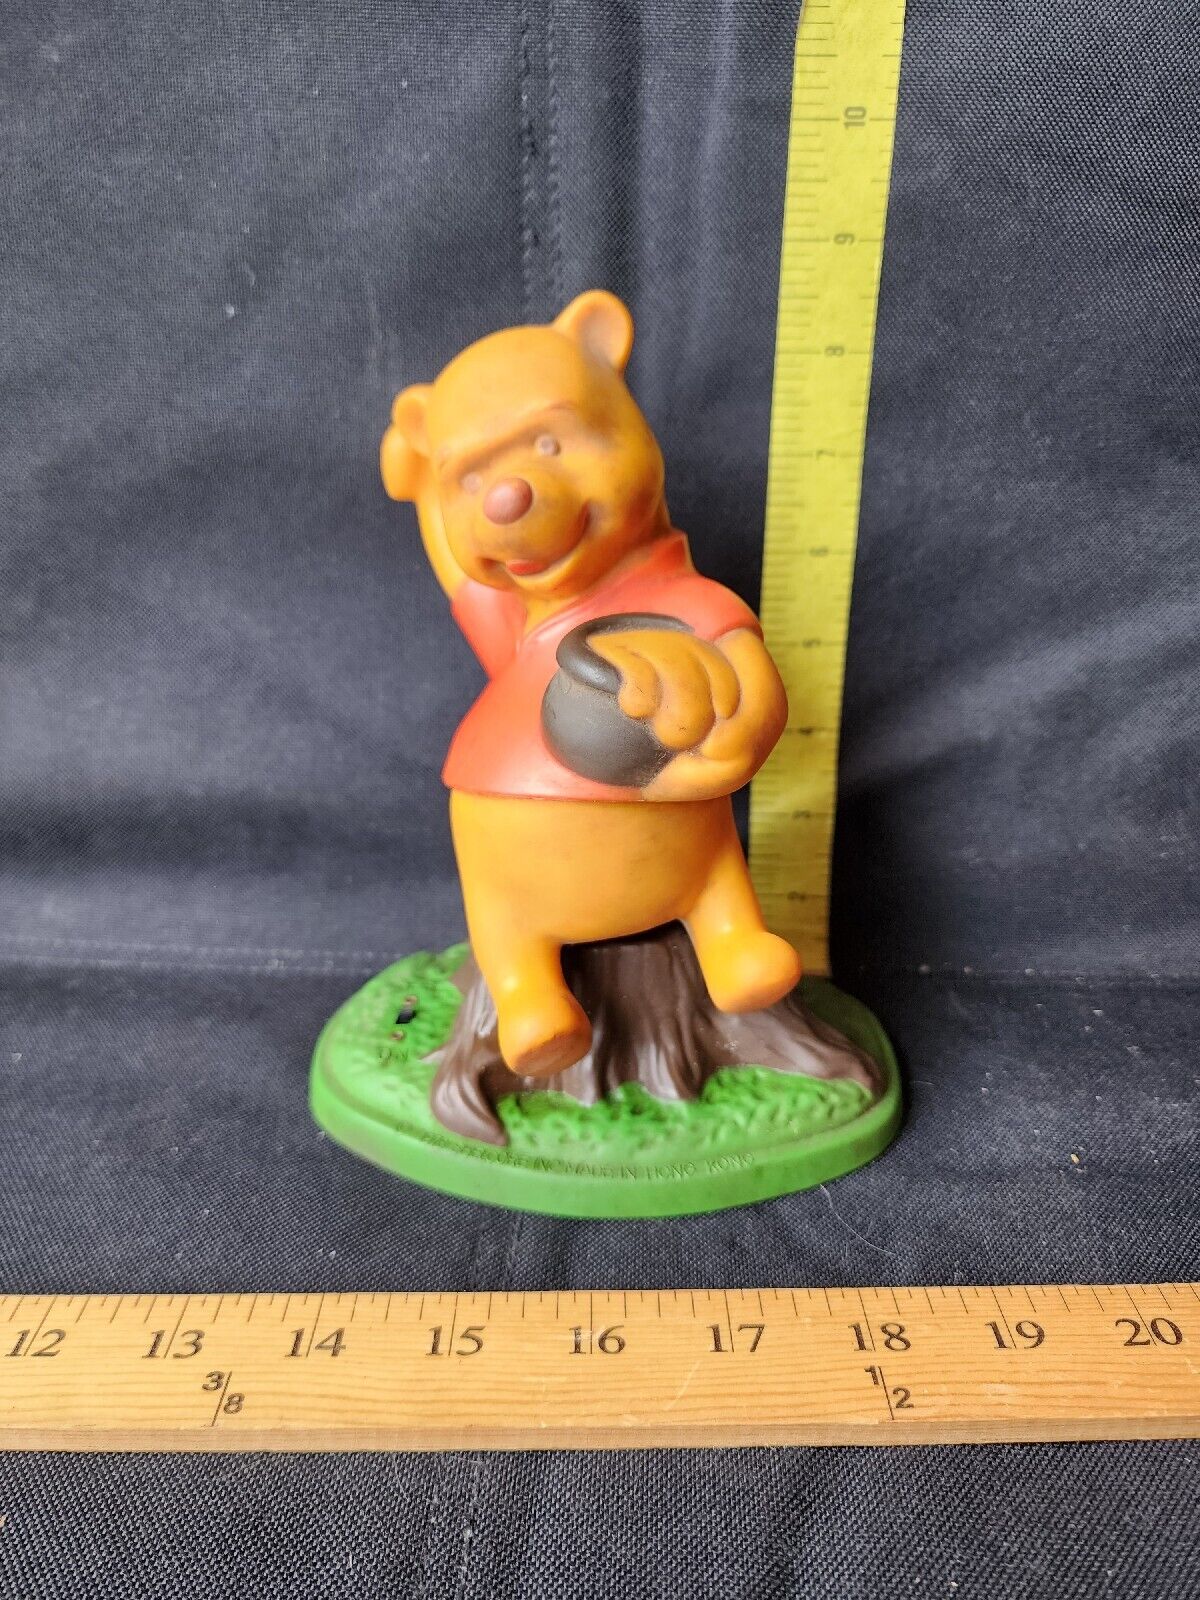 Vintage 1979 Shelcore Light Up Winnie The Pooh Figurine Untested